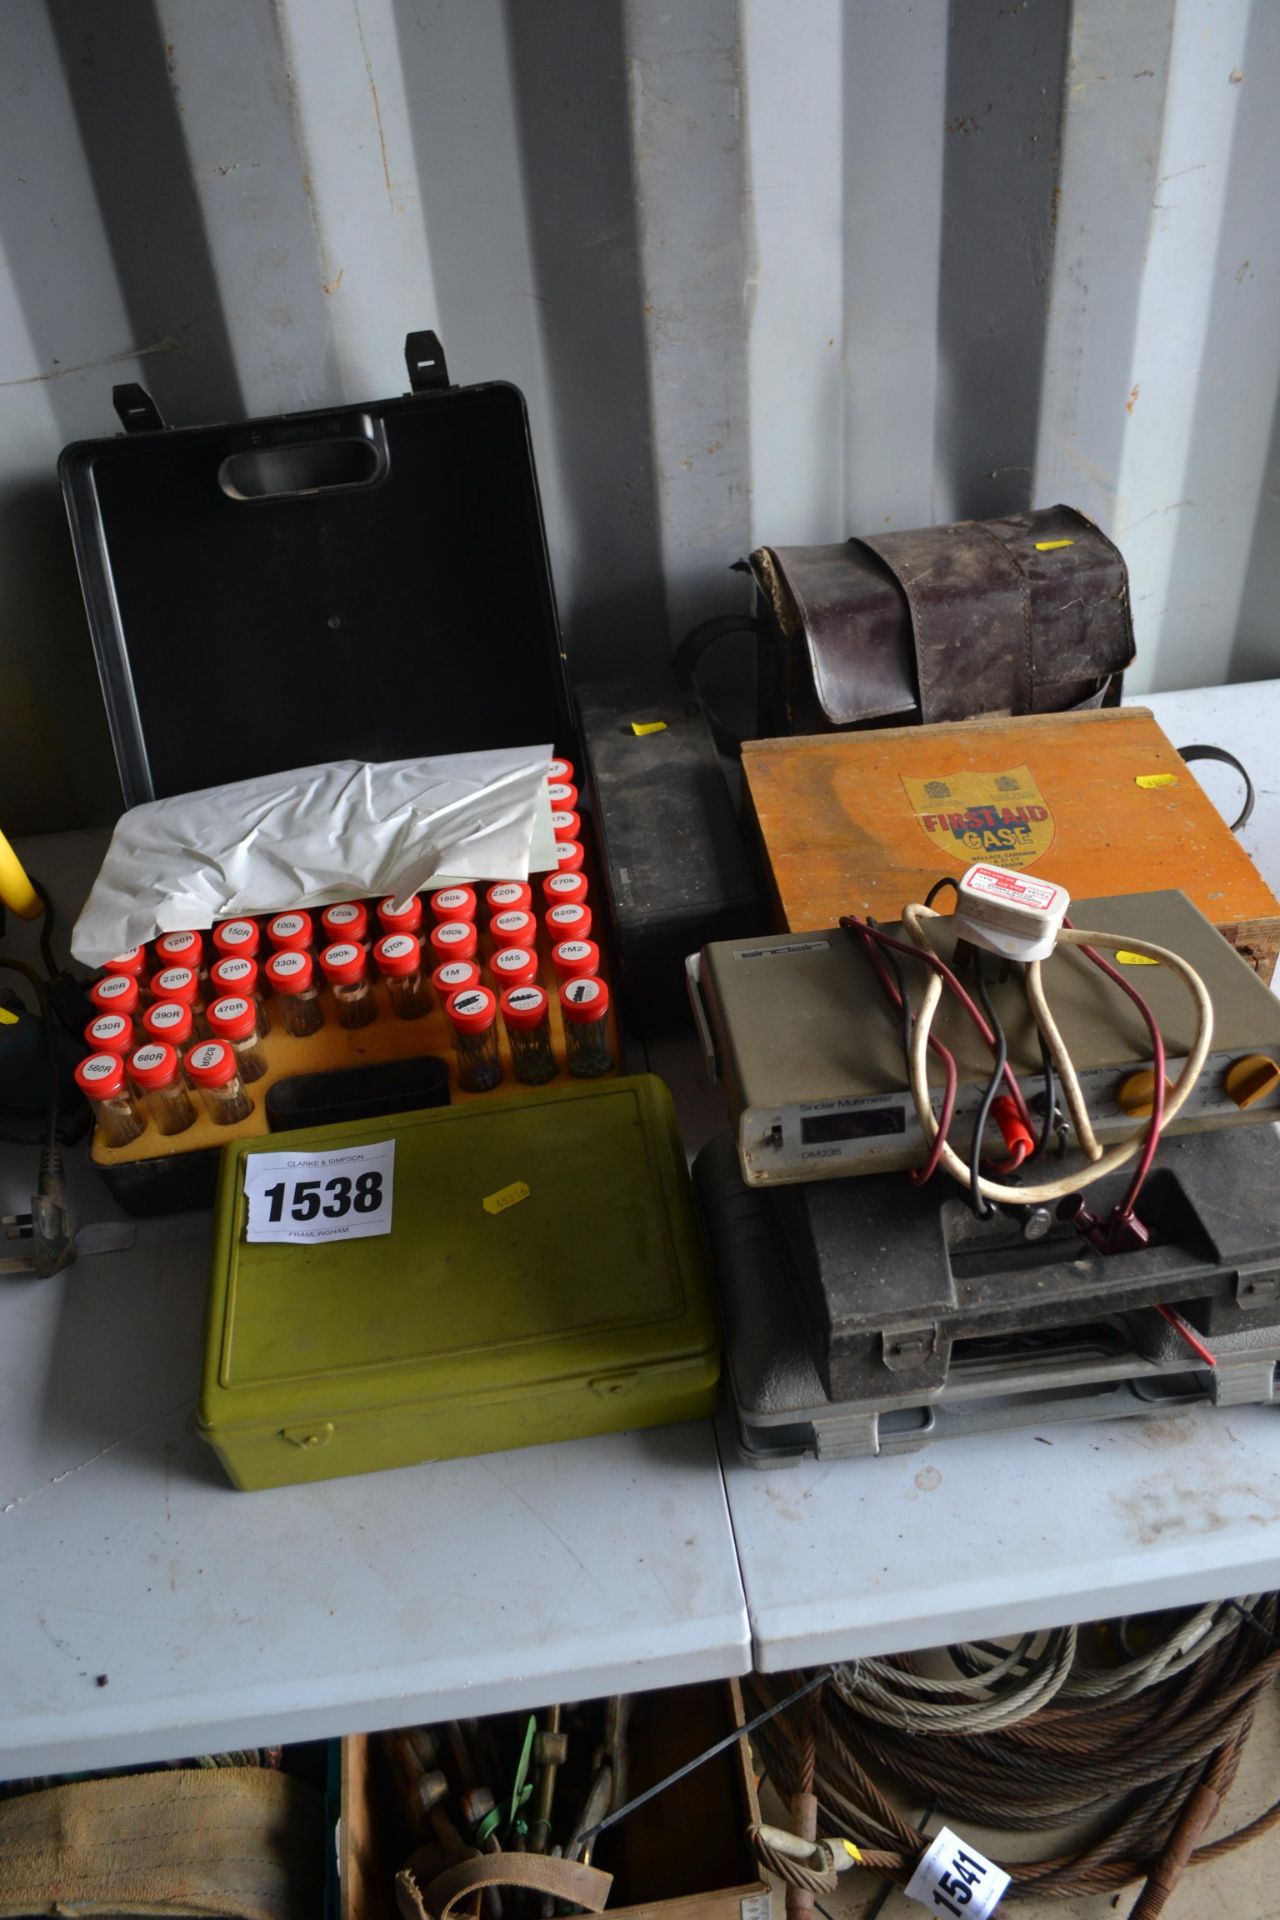 Various test equipment, large quantity of resistor